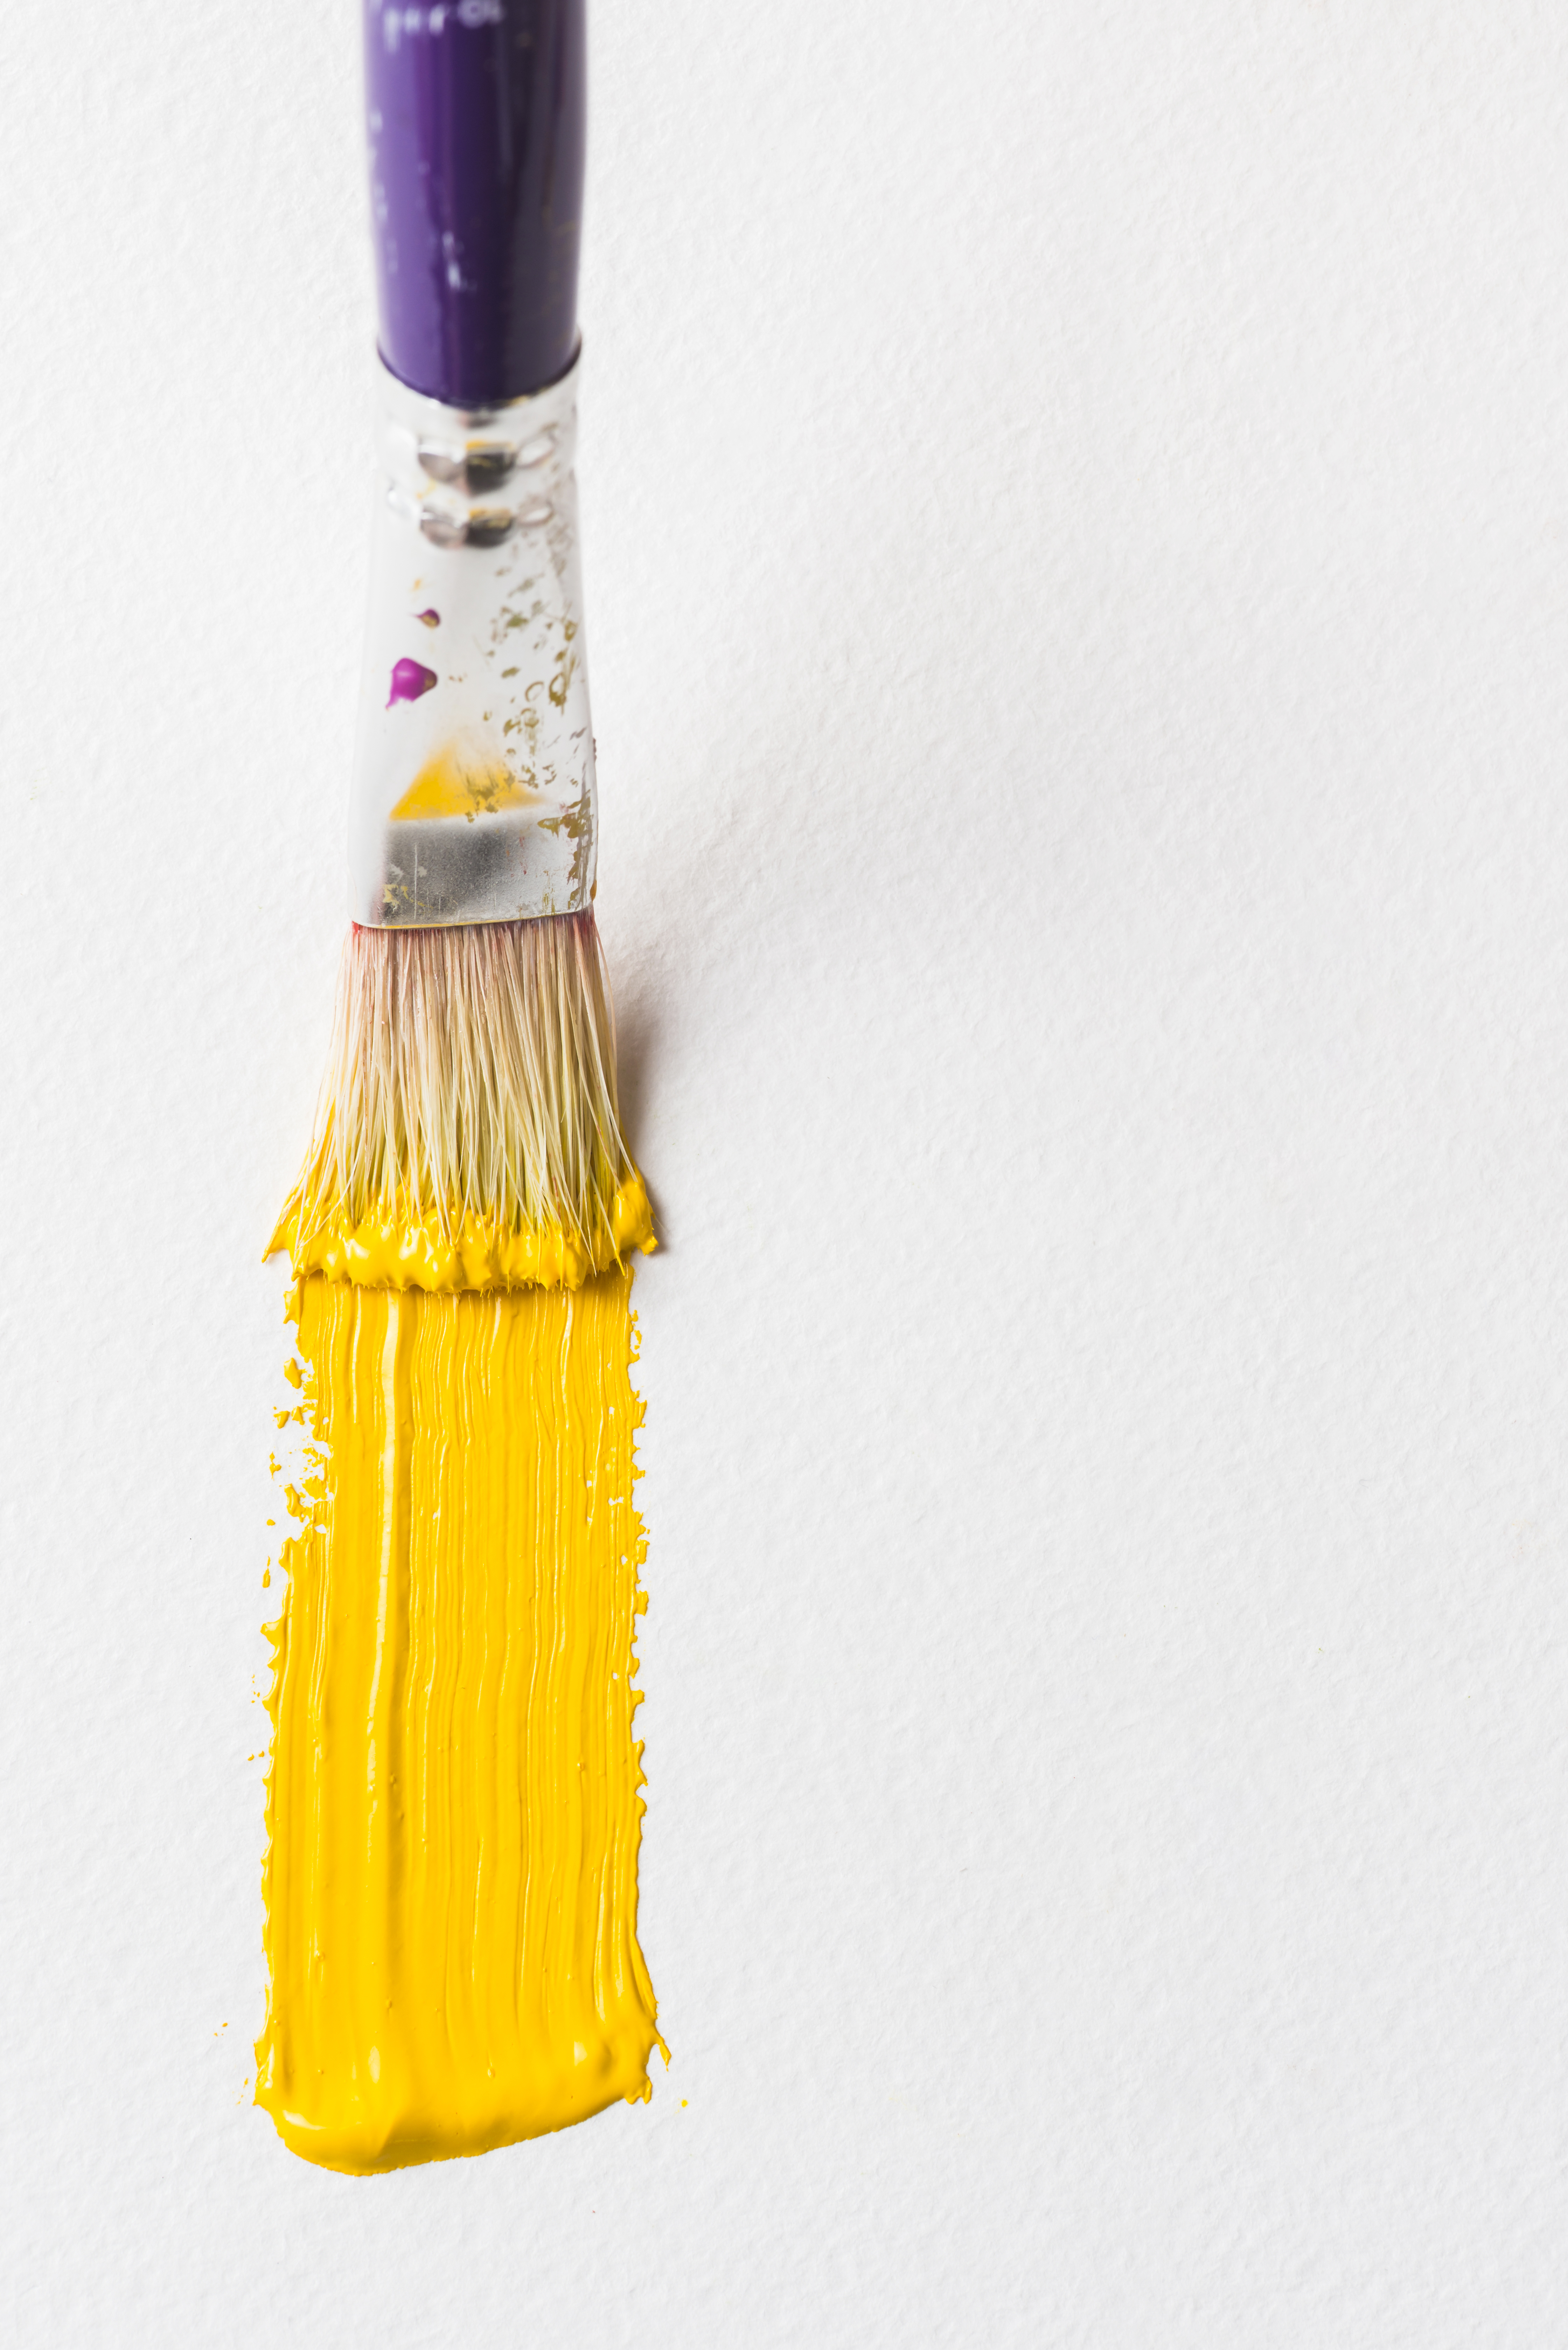 Bristle brush painting on a white surface | Source: Freepik